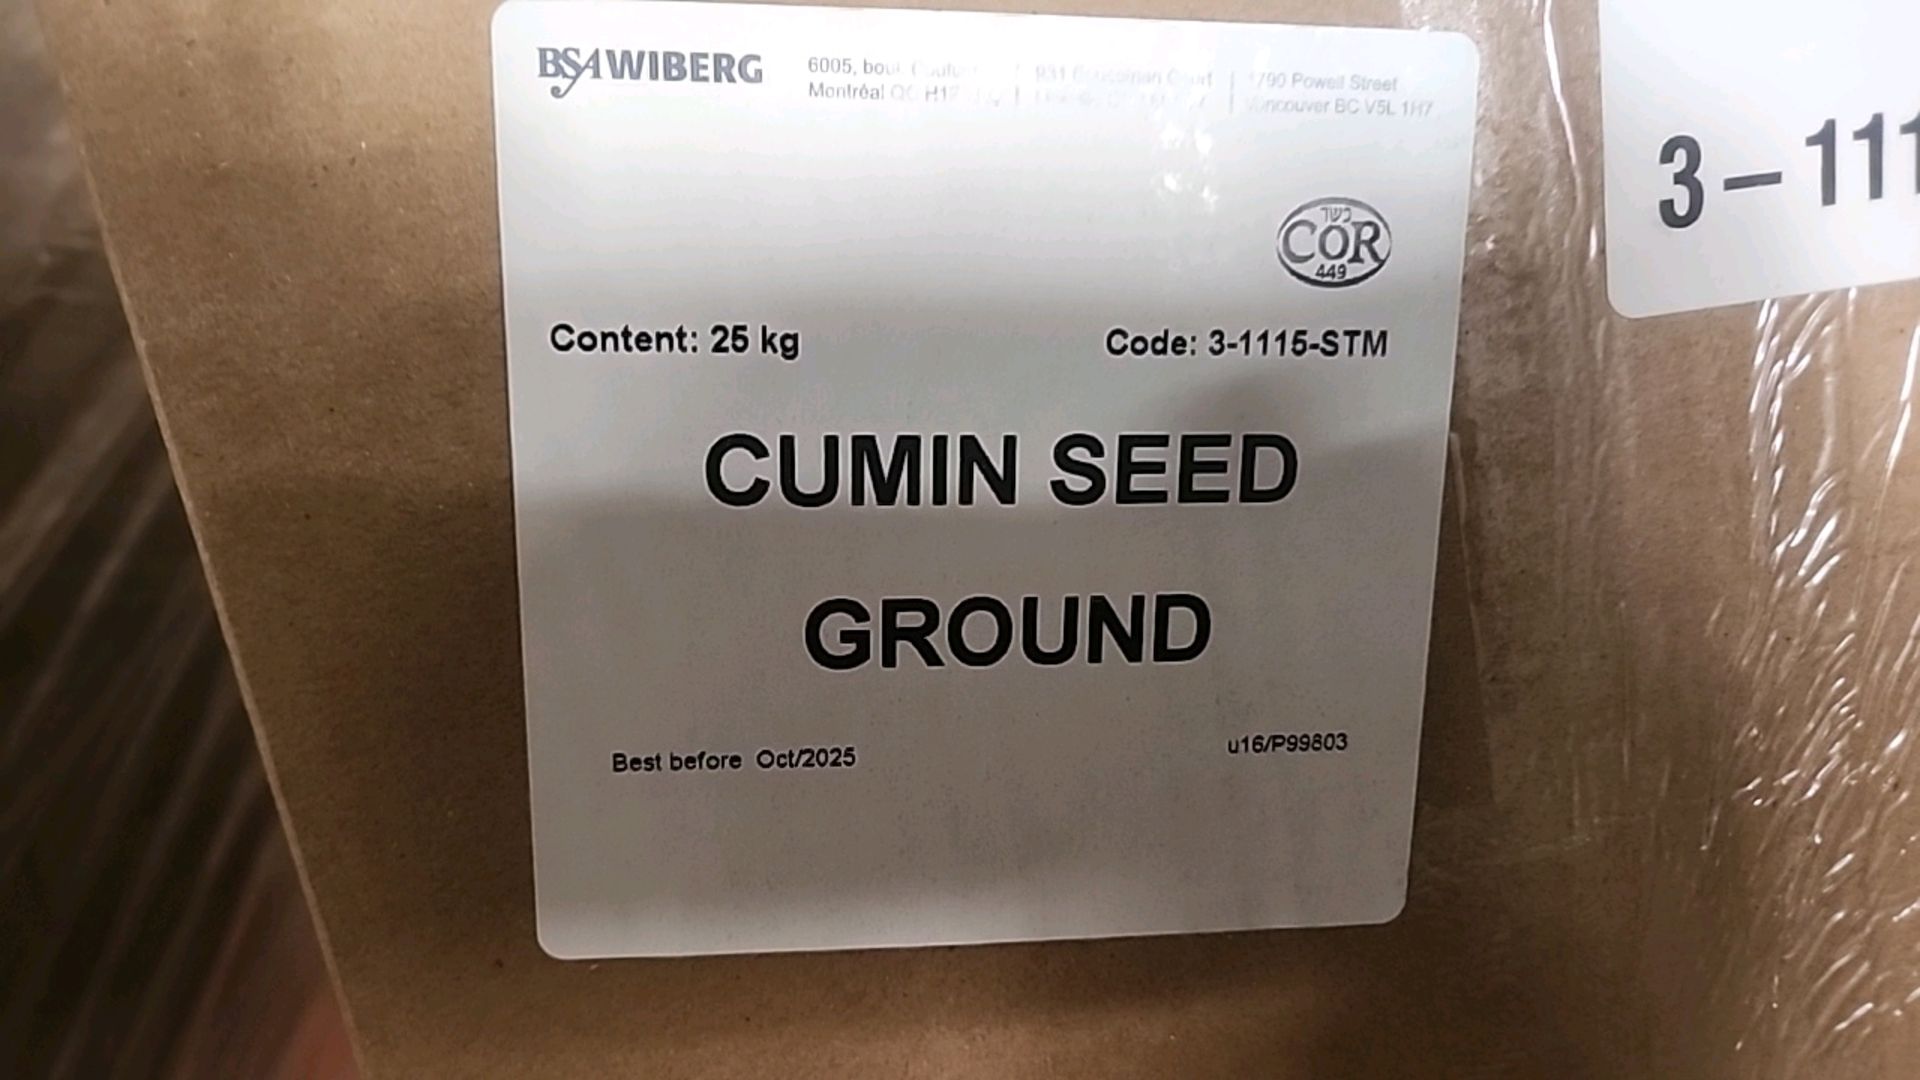 (8 boxes/25 kg ea. = 200 kg) BSA Wiberg ground cumin 3-1115-STM [Loc.Warehouse] - Image 2 of 3